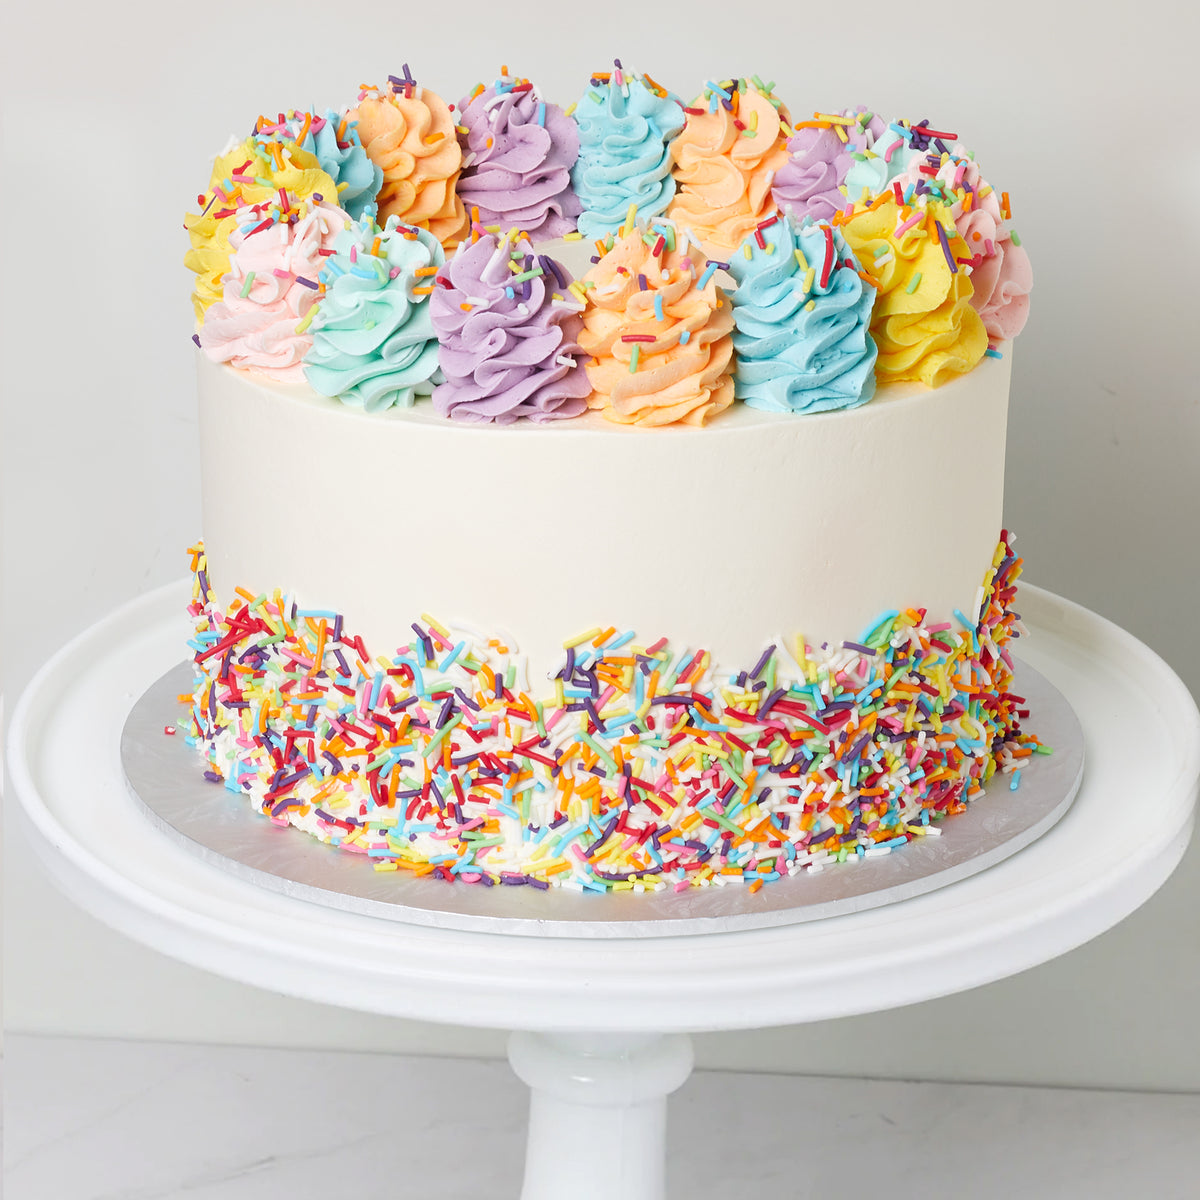 Vanilla Rainbow Cake Delivery in London – Punk cake